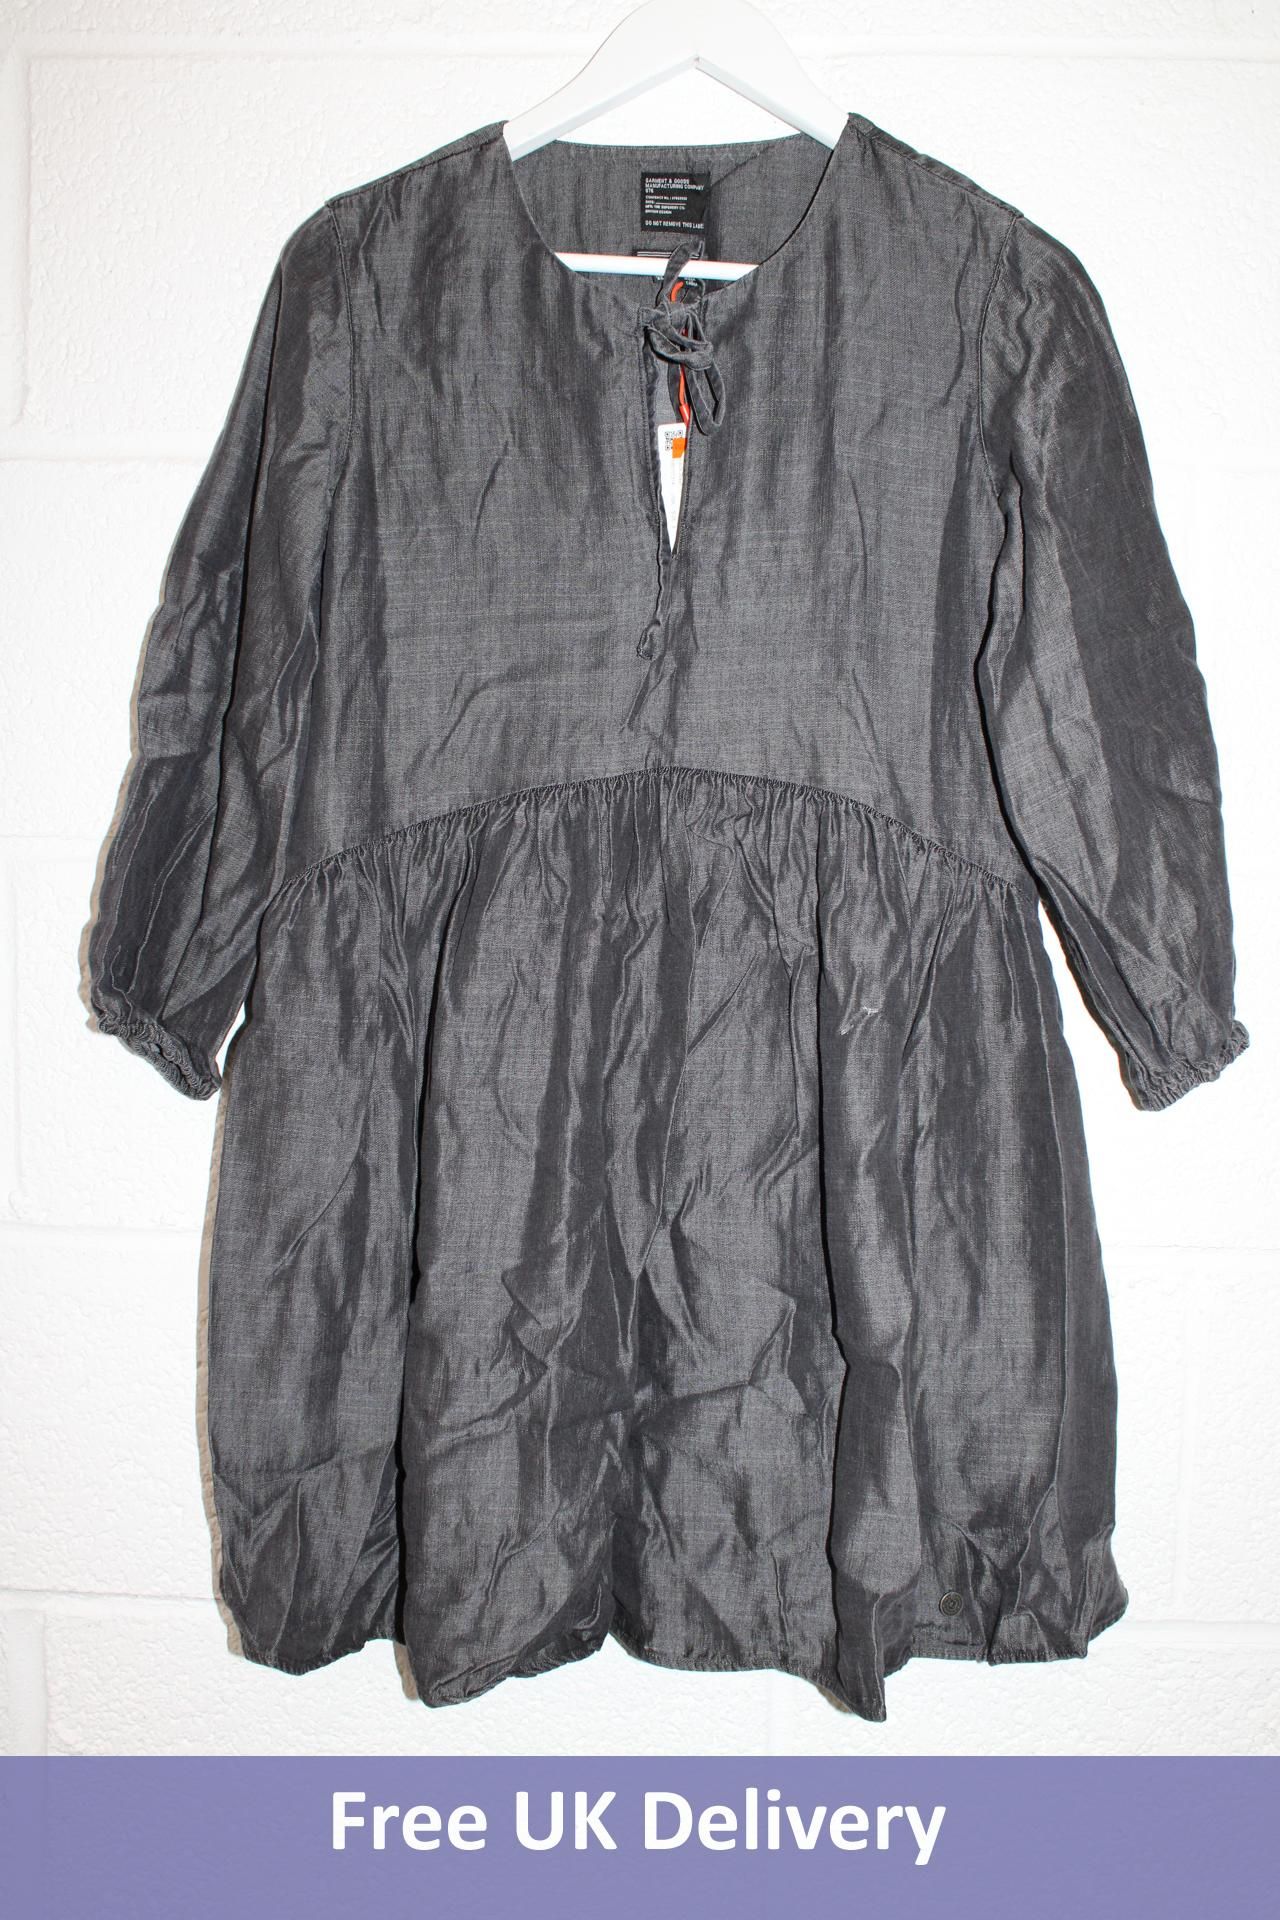 Superdry LS Tencel Dress, Black wash, UK 8